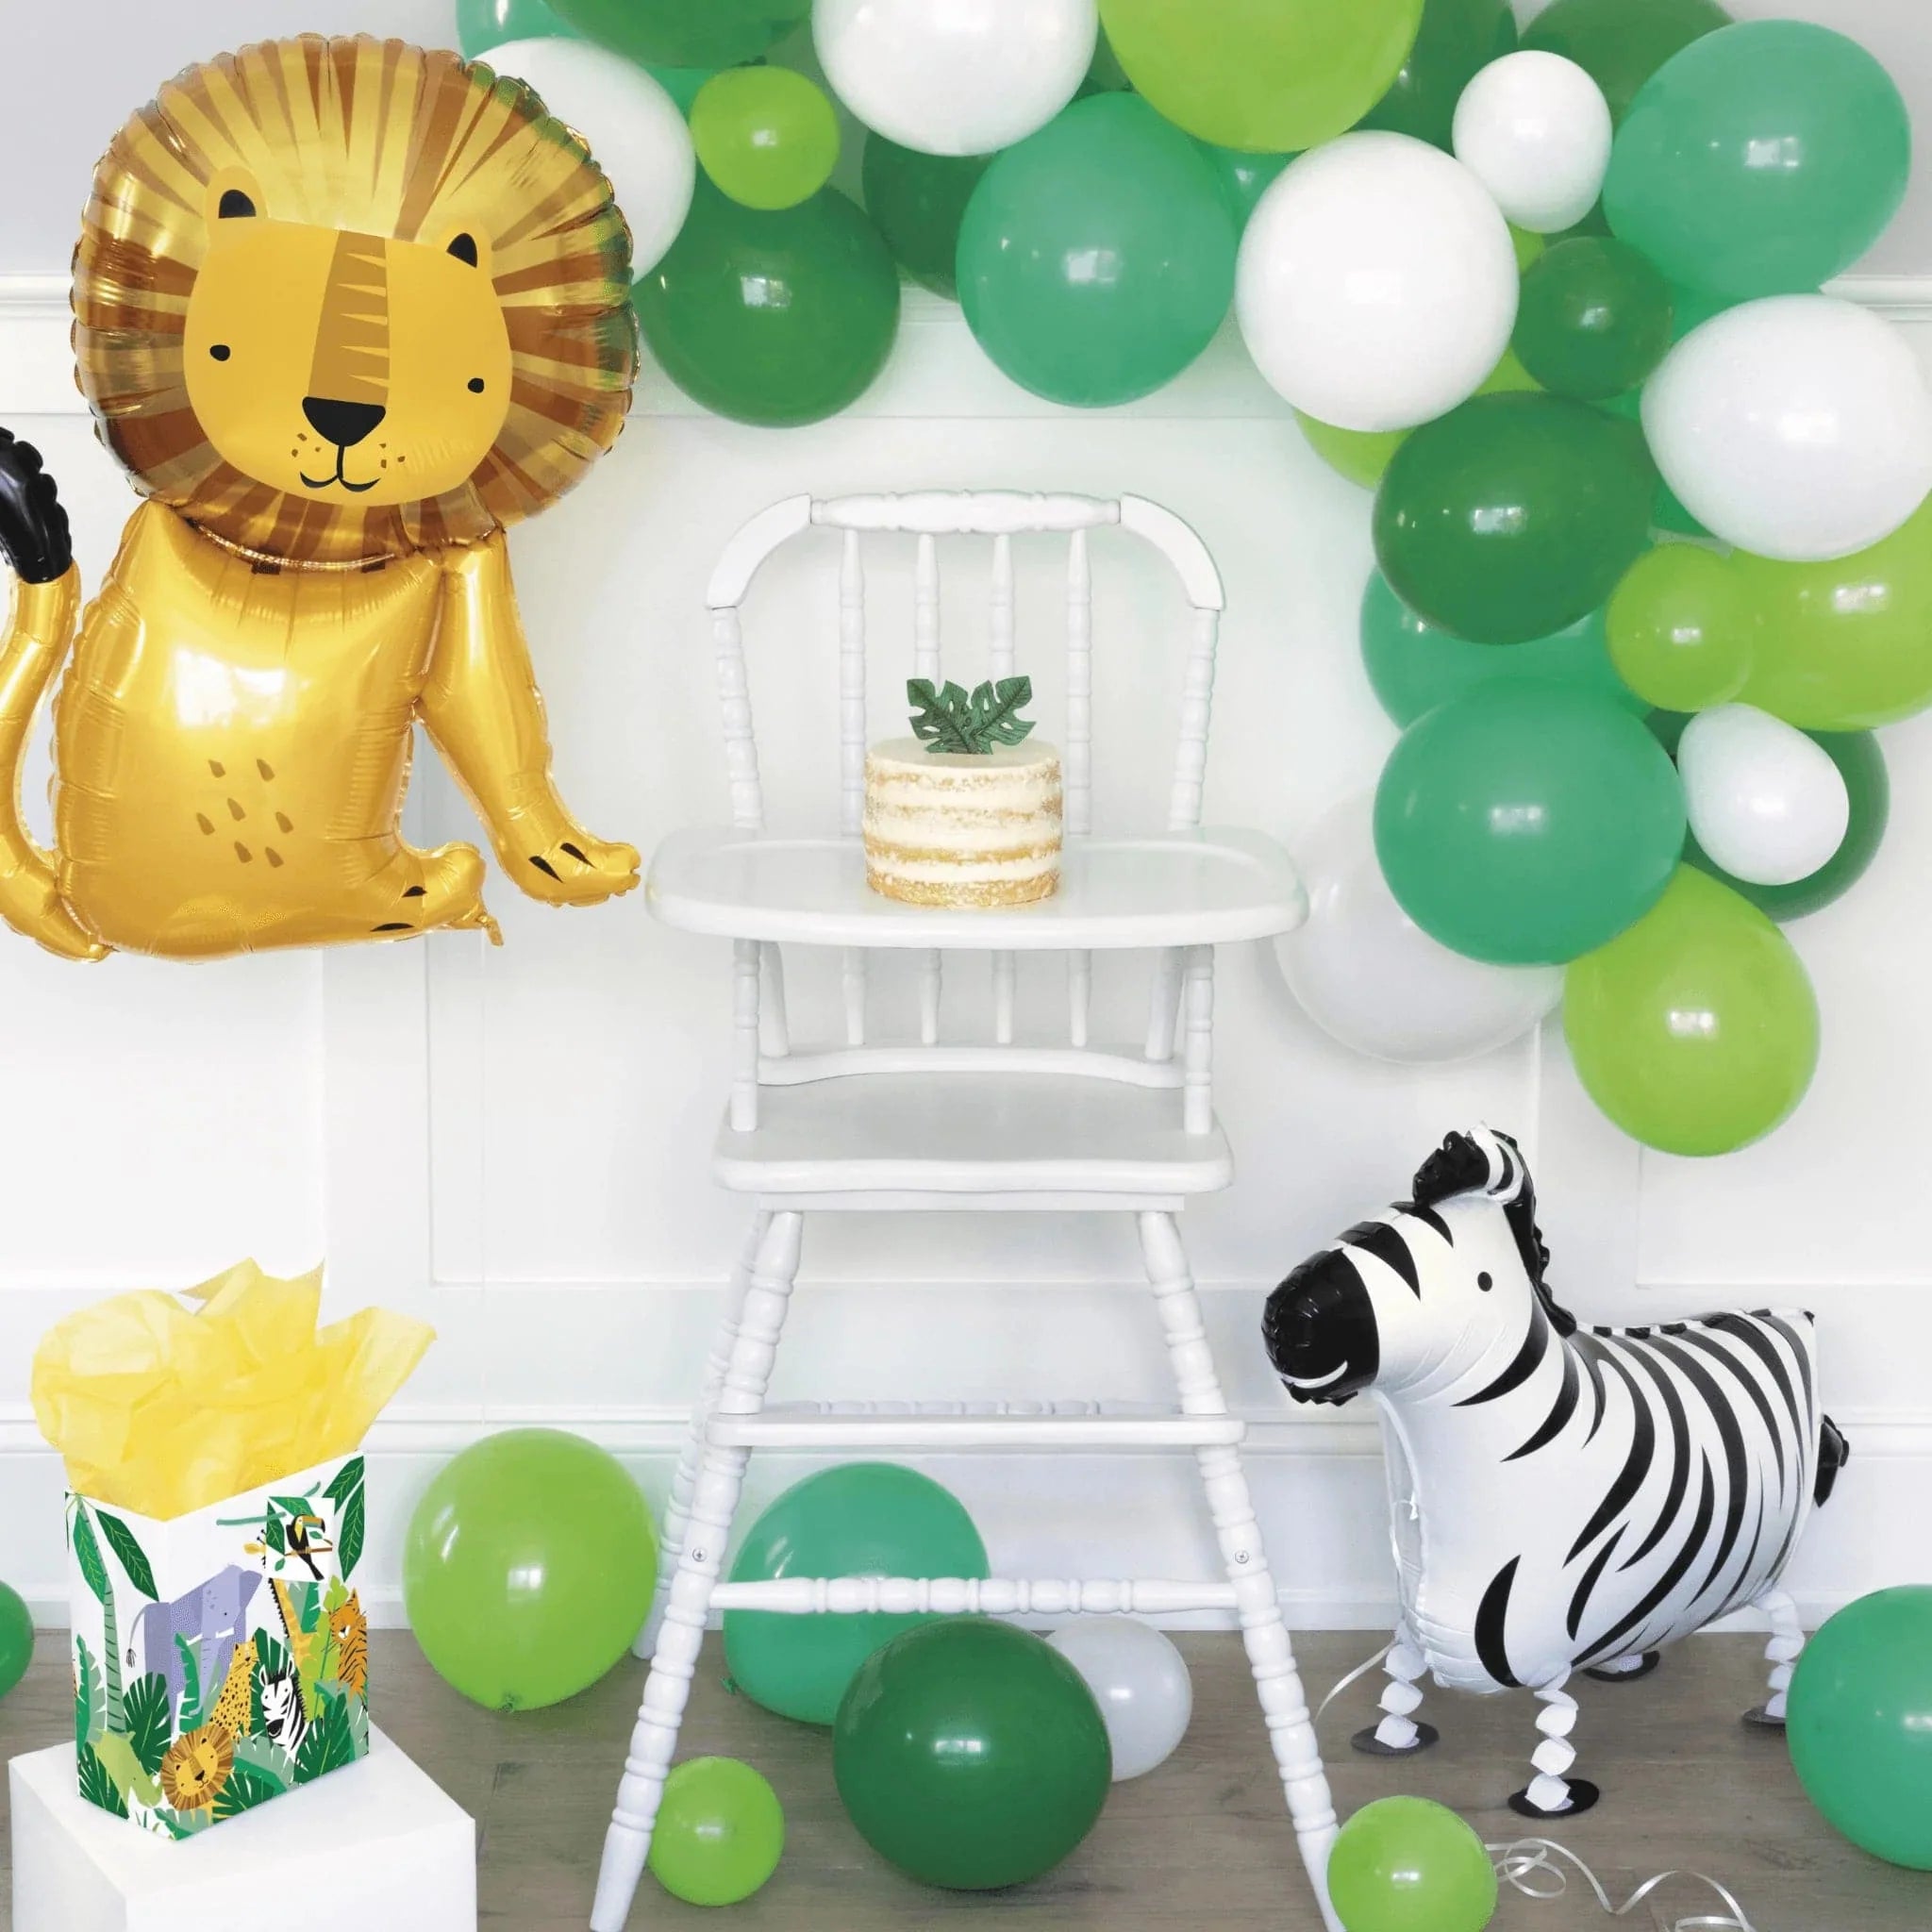 Animal Safari 18" Foil Balloon - Kids Party Craft